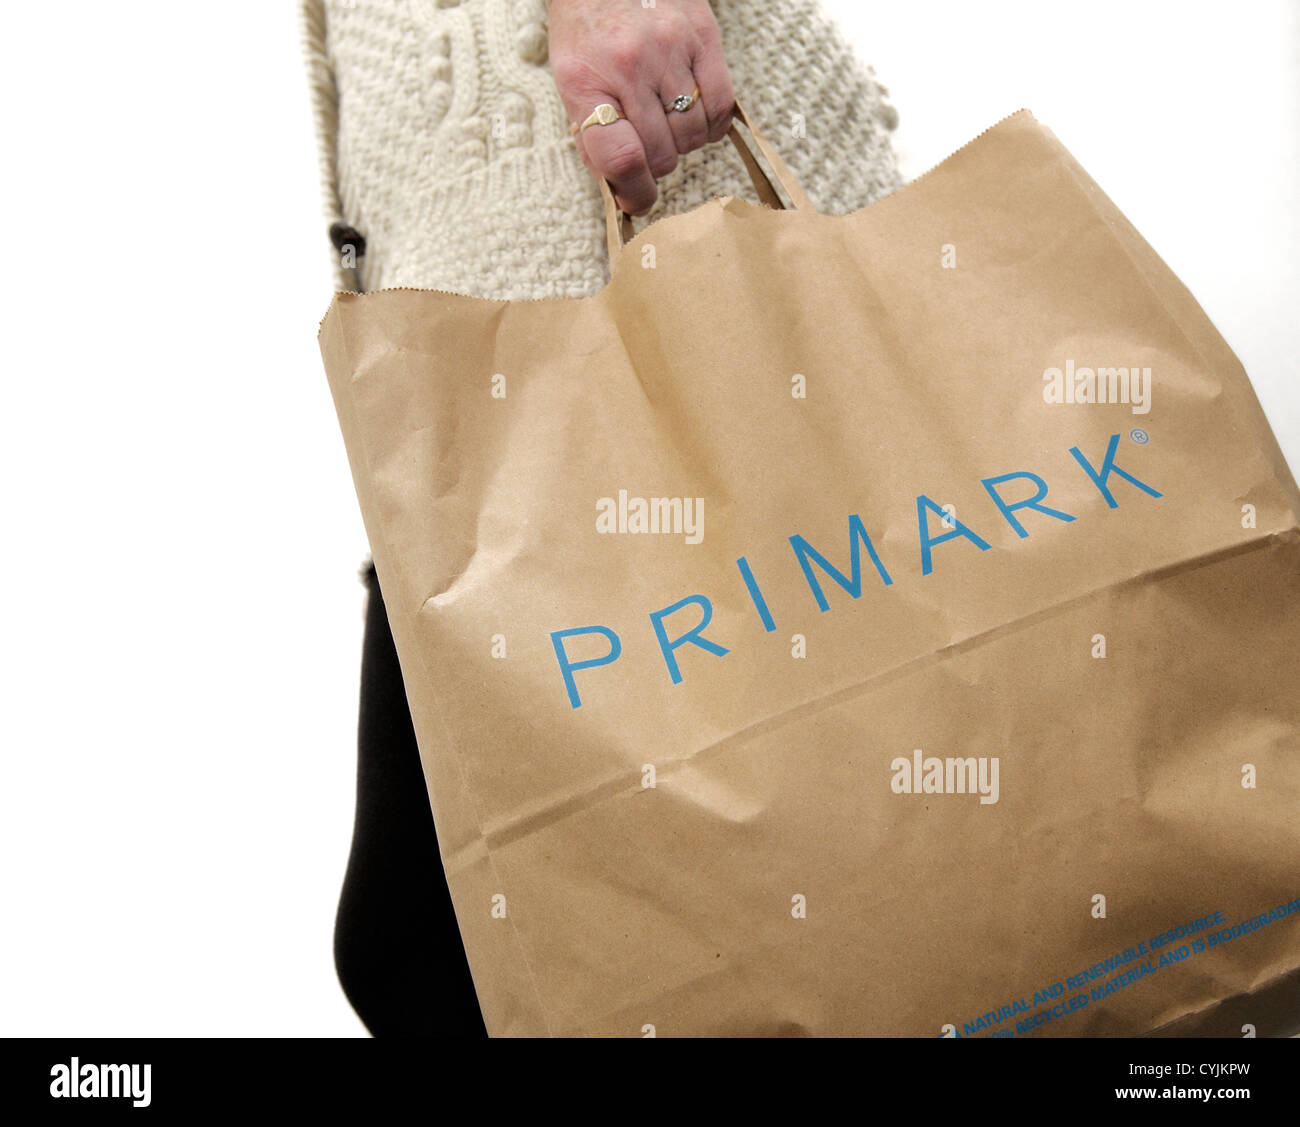 primark brown paper carrier bag england uk Stock Photo